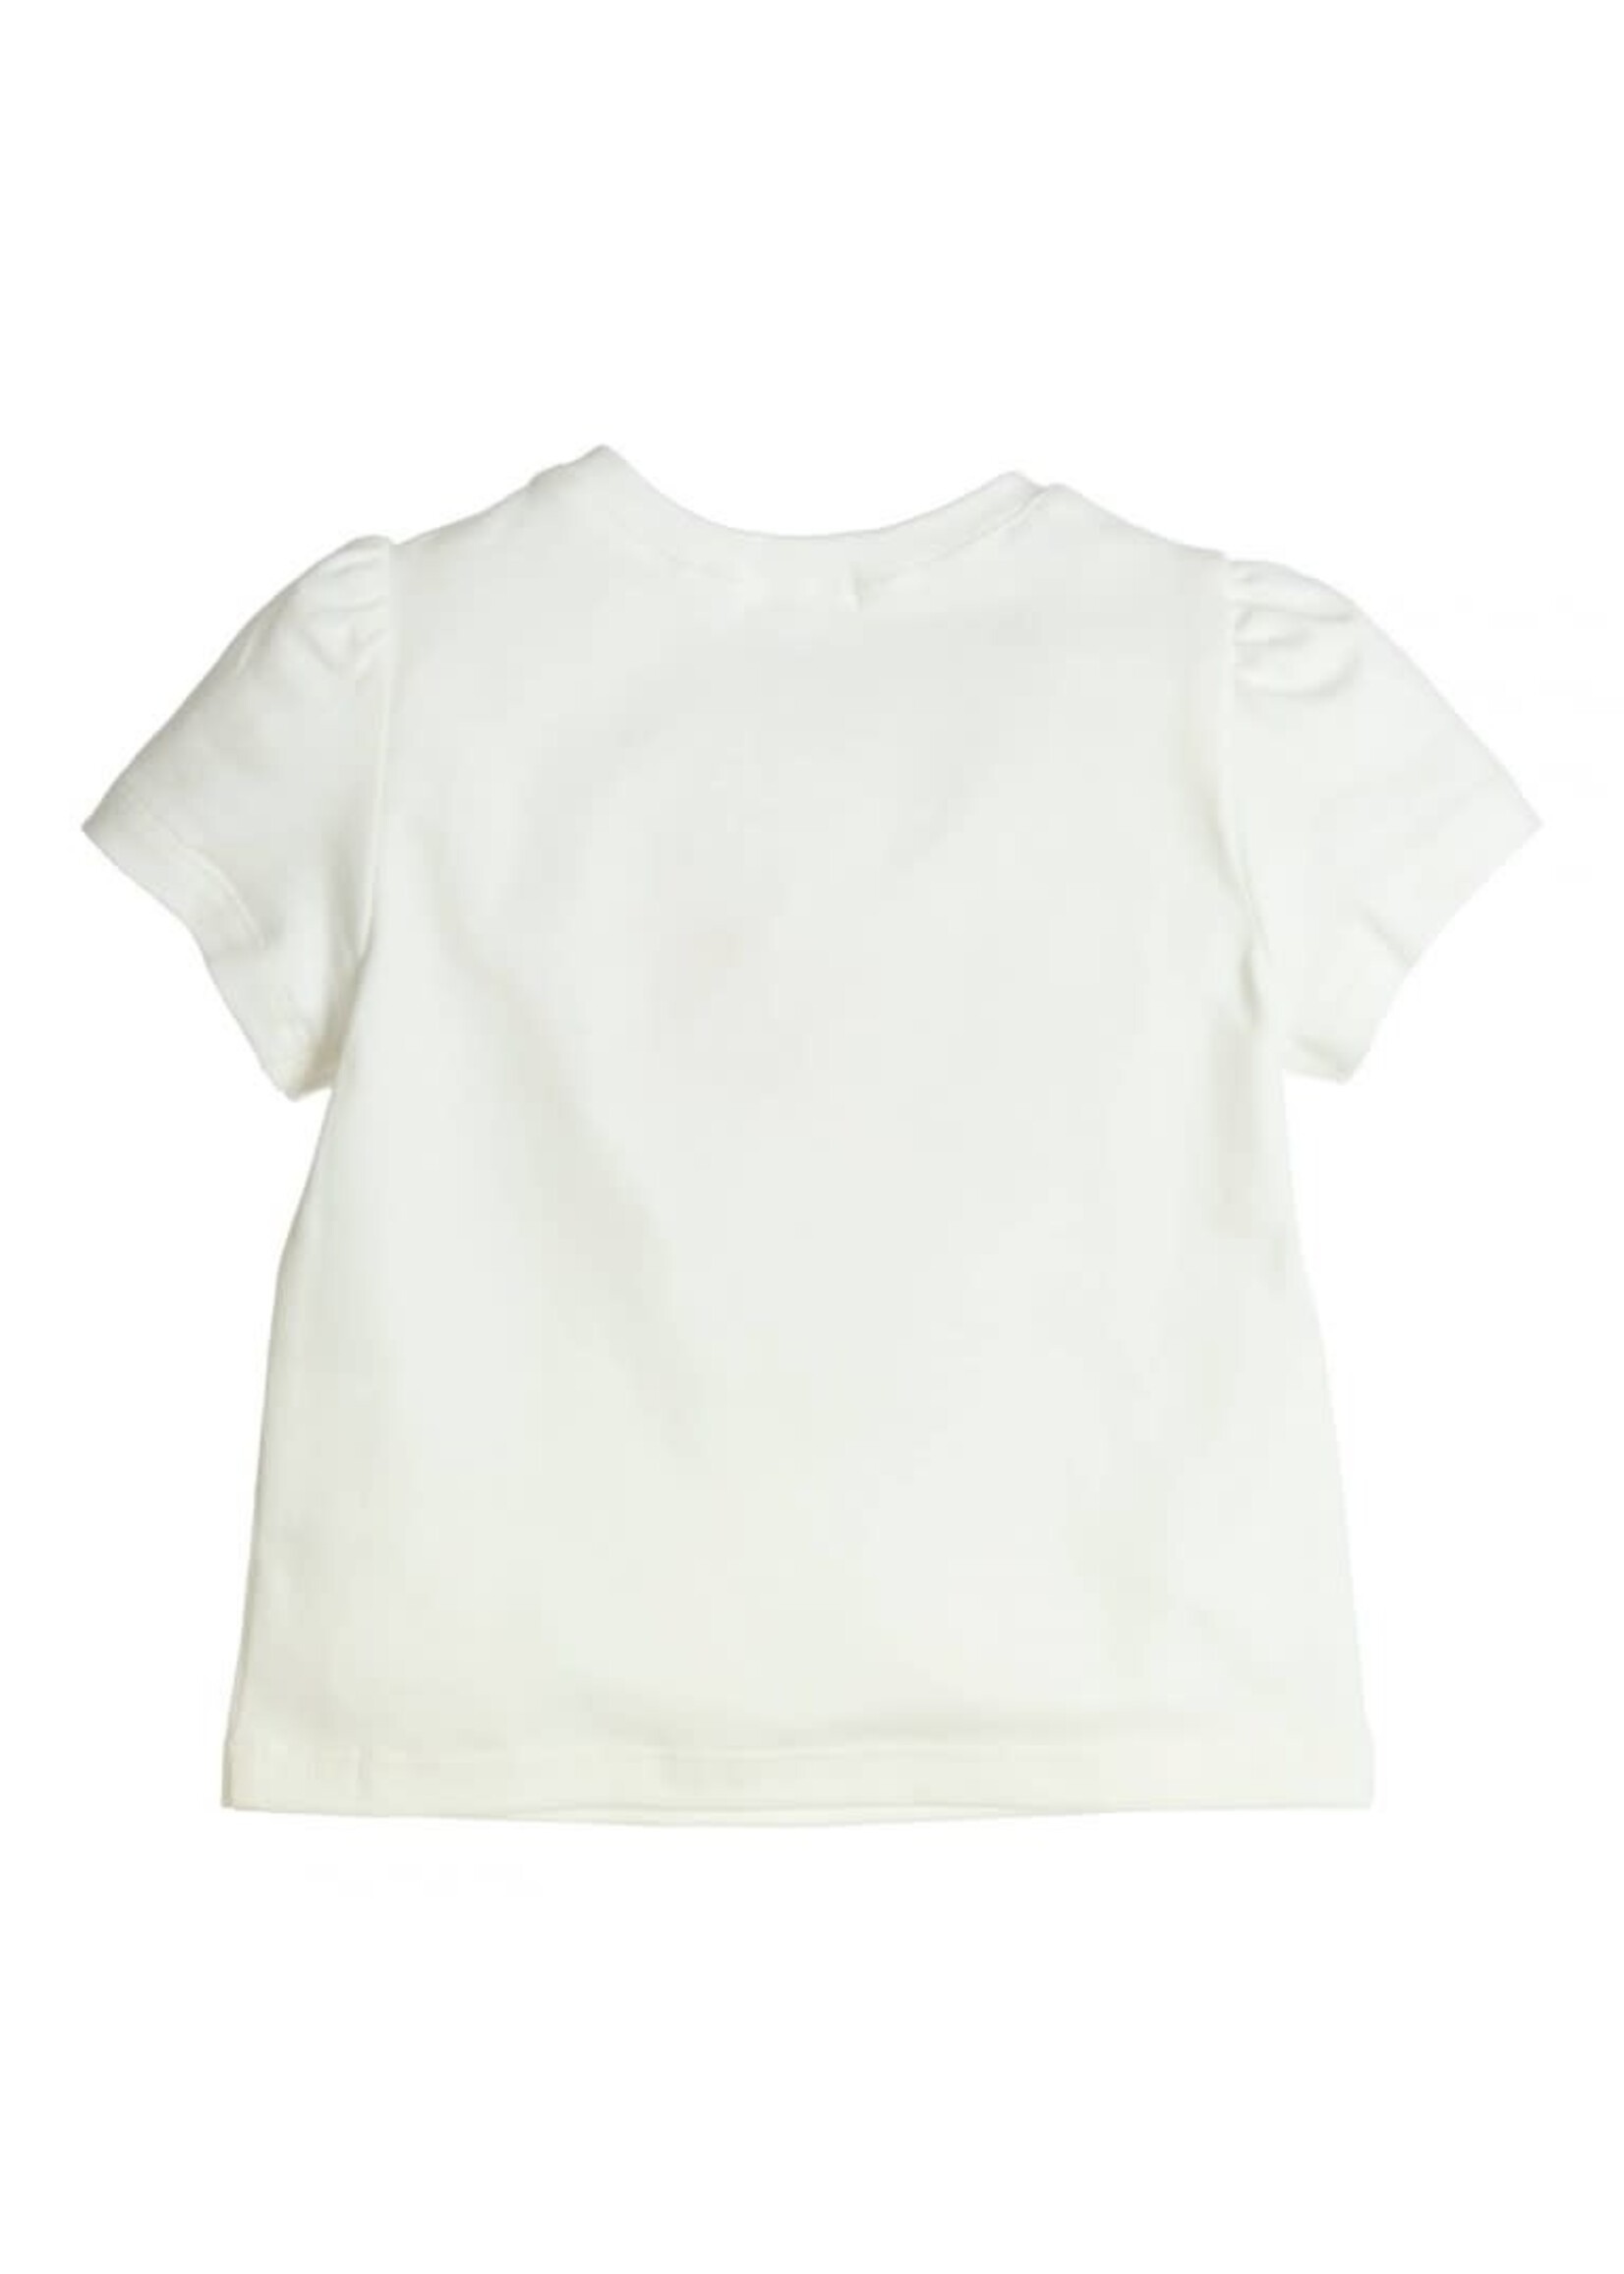 GYMP GYMP T-shirt Aerobic Off White 353-4238-10